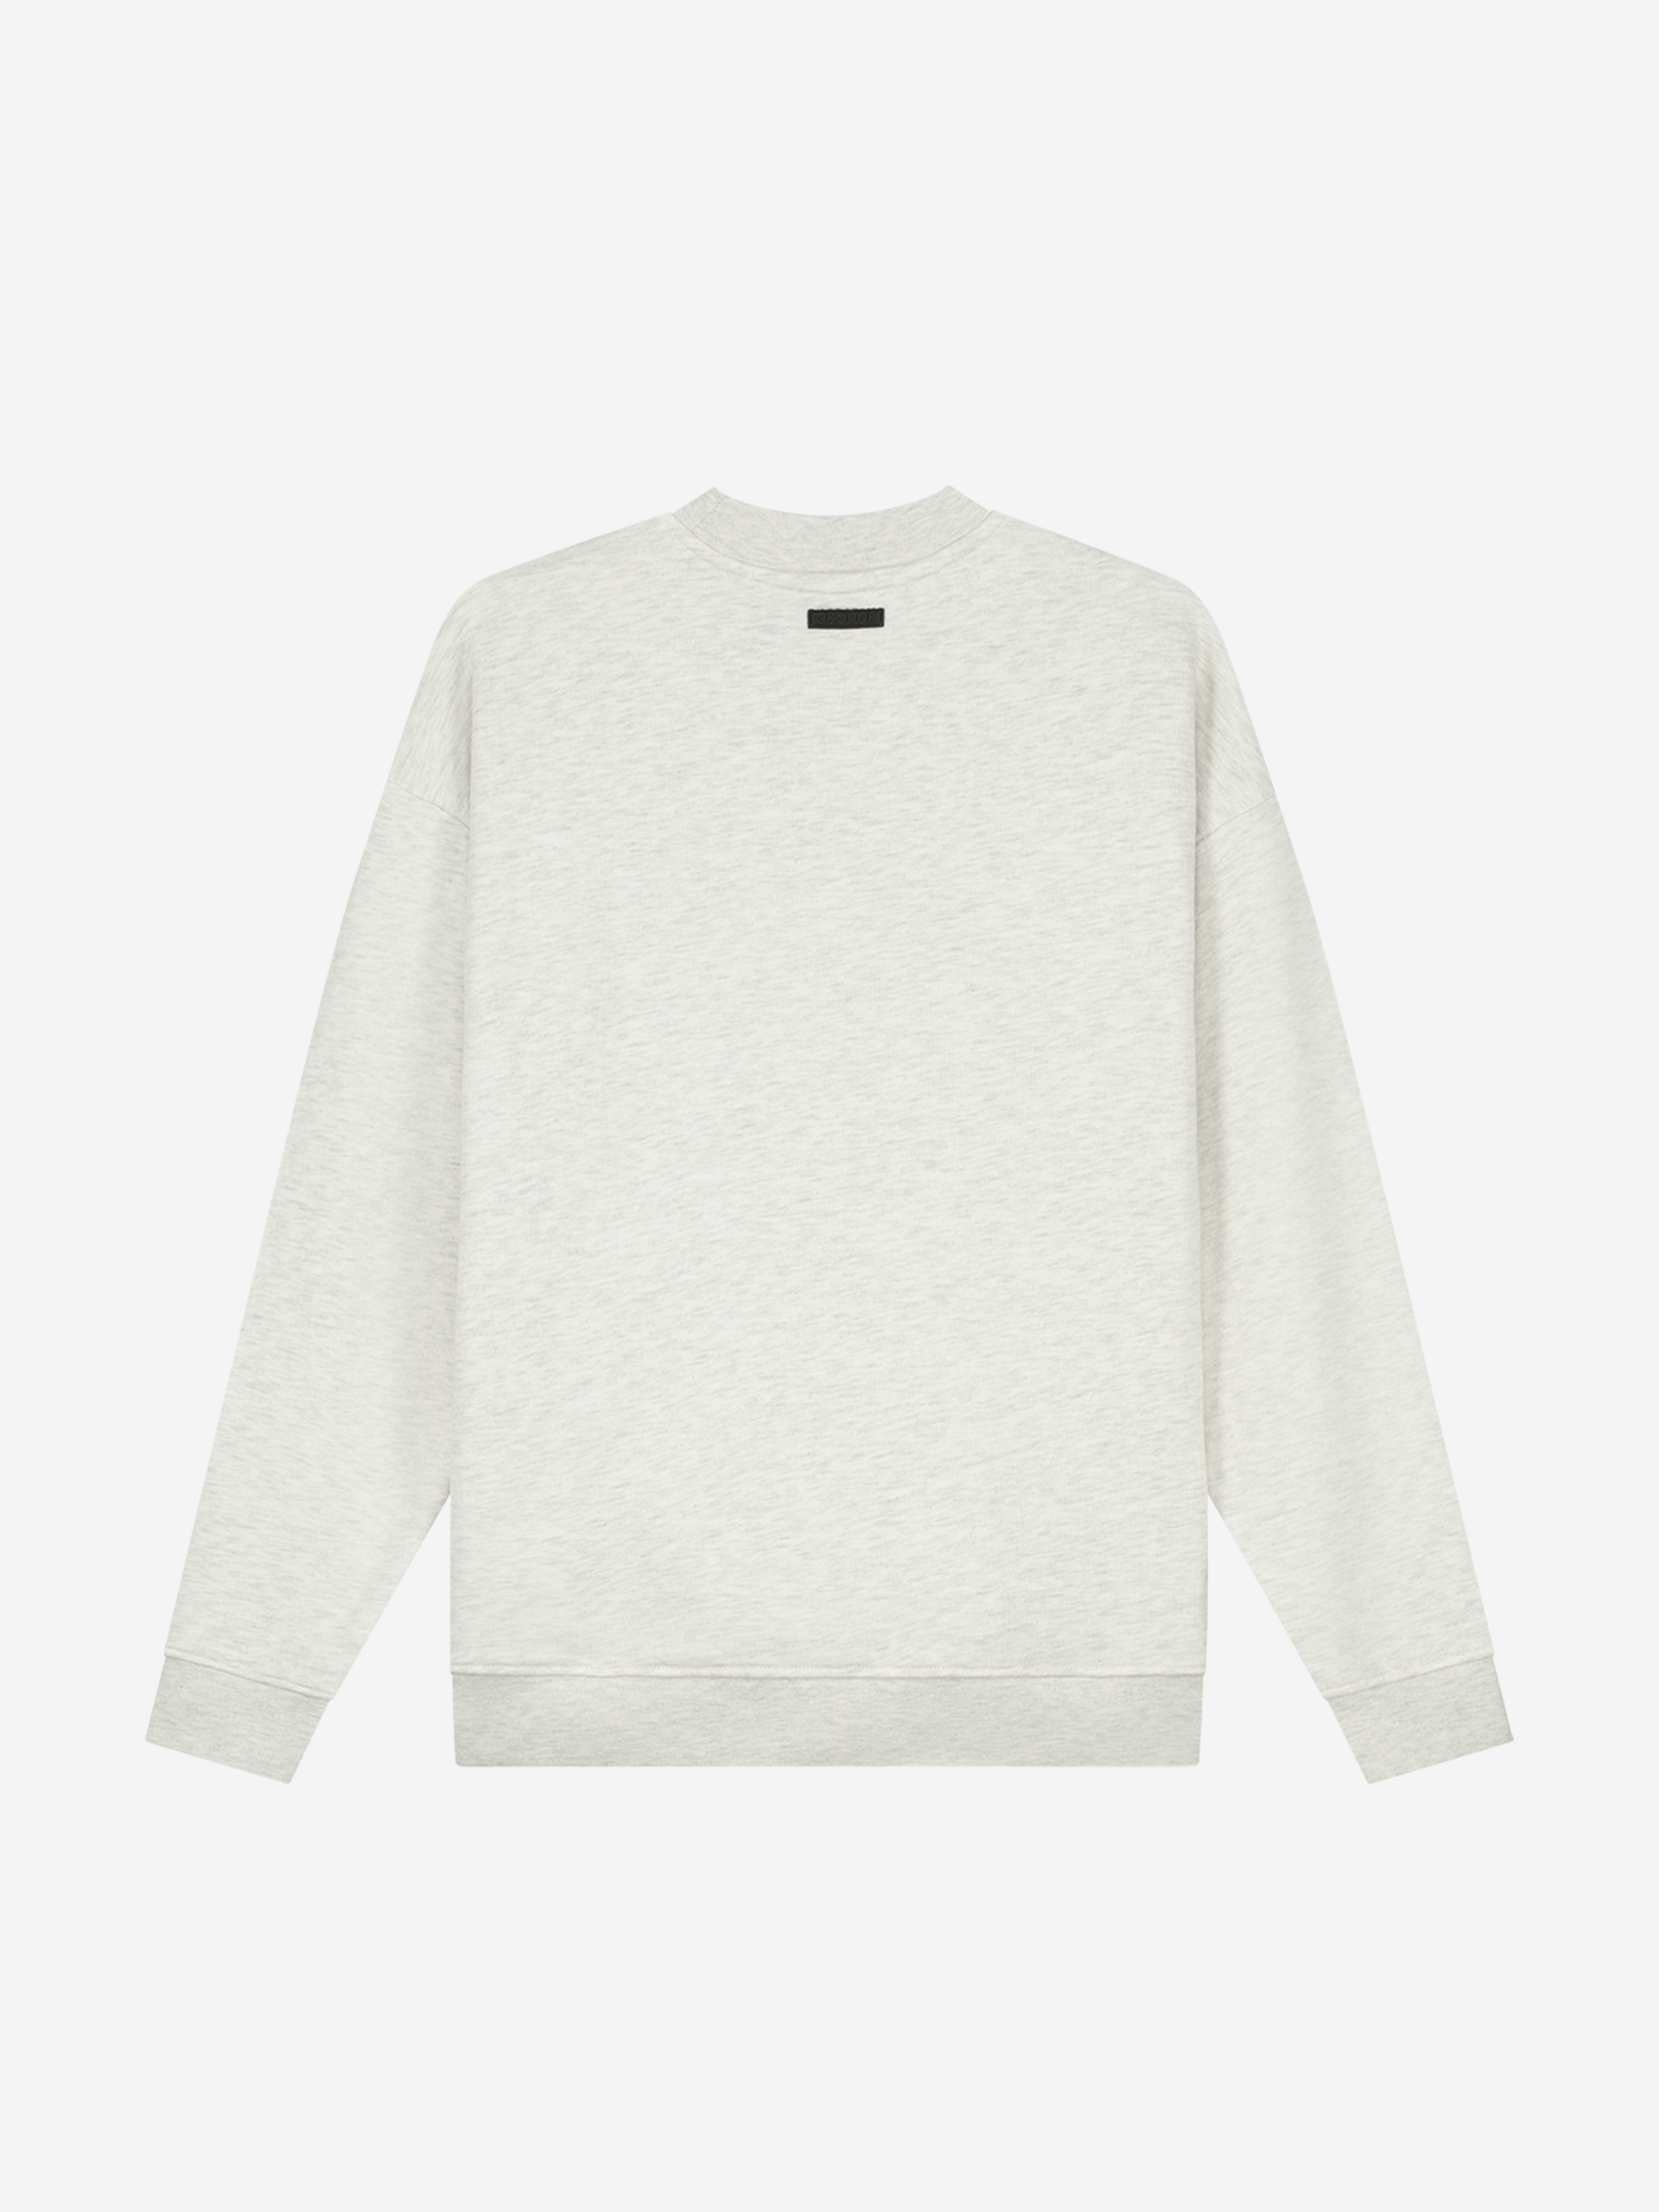 Keep Simple Sweatshirt